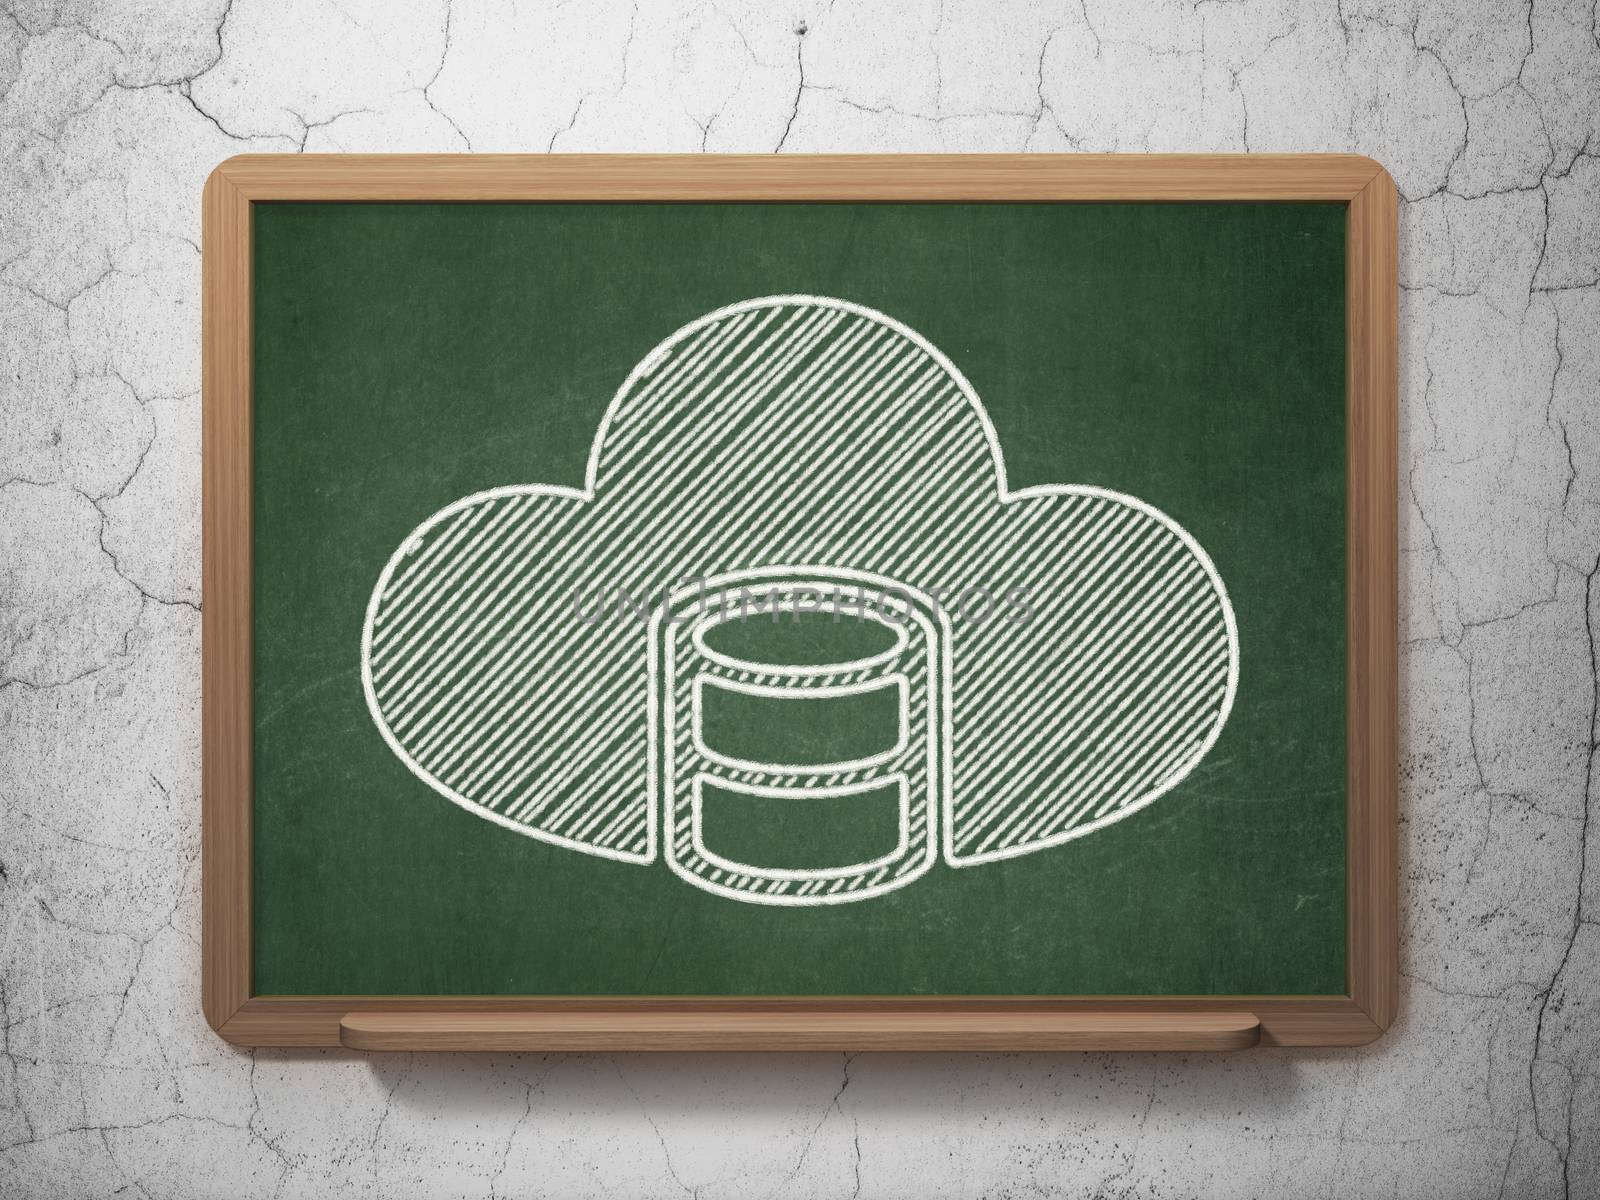 Database concept: Database With Cloud on chalkboard background by maxkabakov